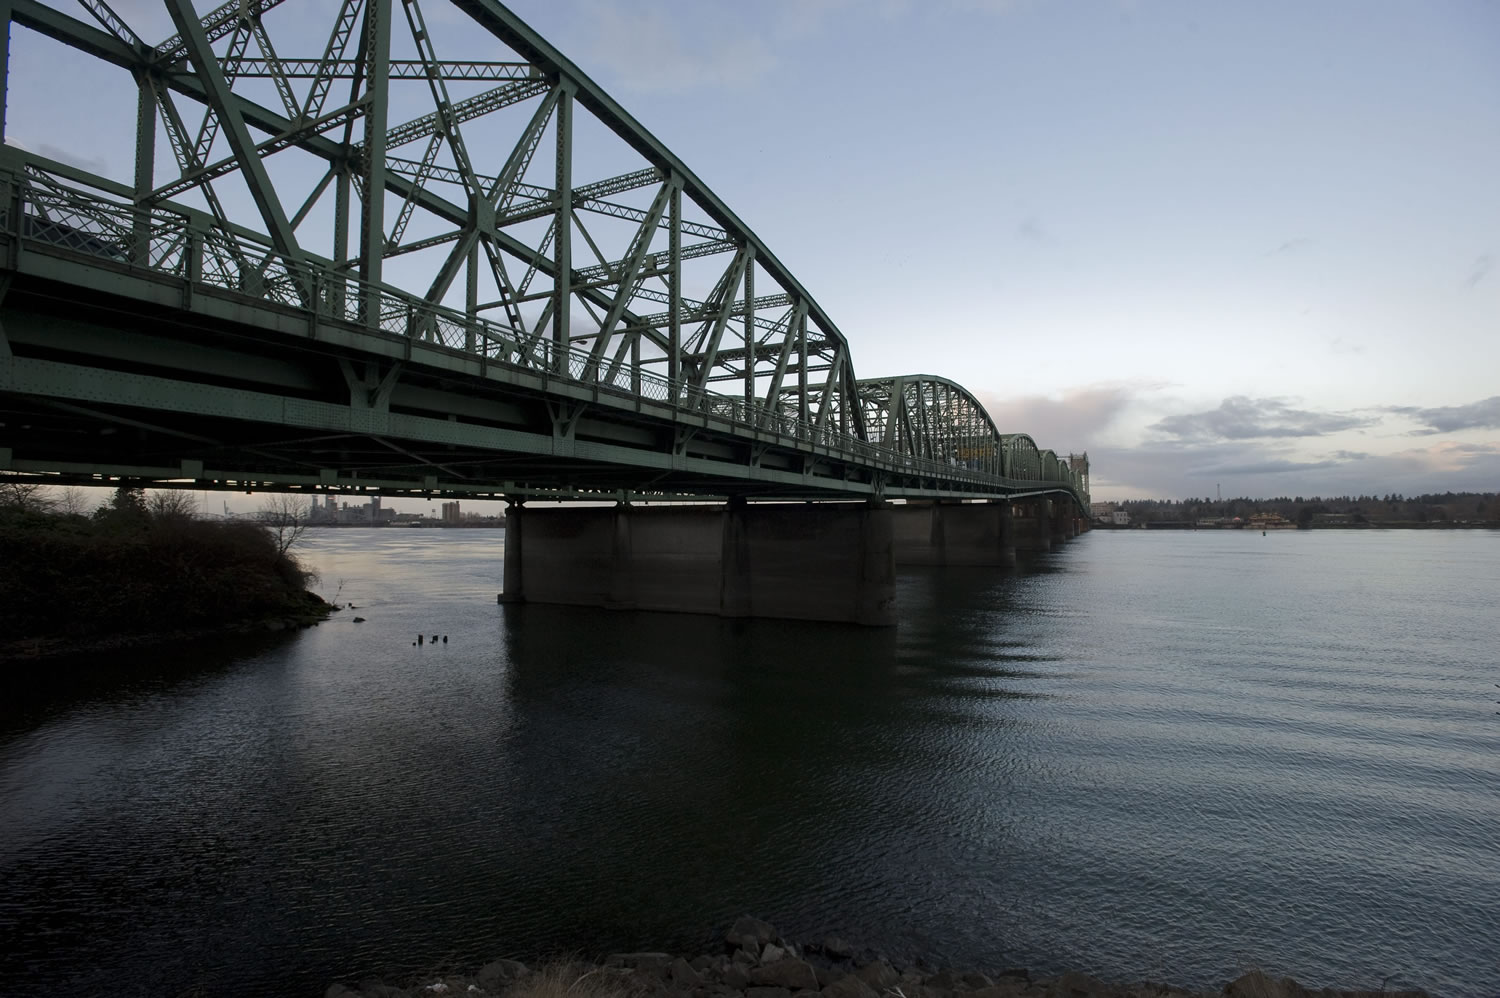 The Interstate 5 bridge from the Oregon side looking northwest toward Washington.